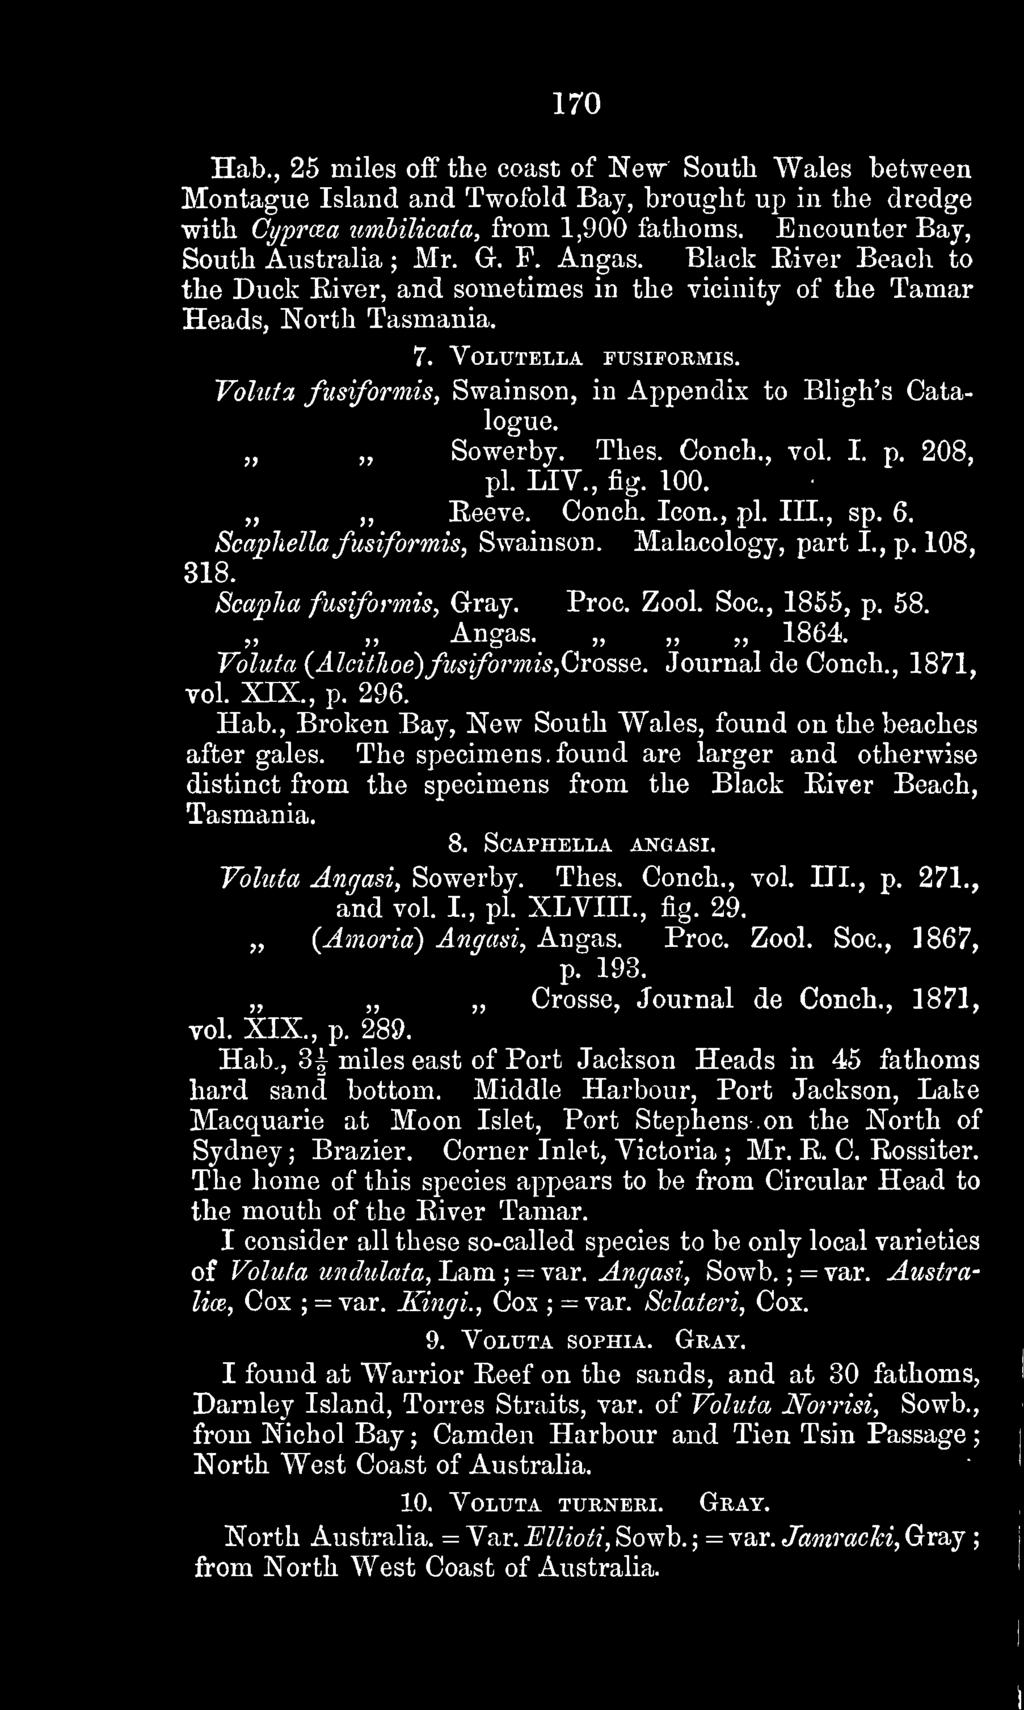 Voluta fiisiformis, Swainson, in Appendix to Bligh's Catalogue. Sowerby. Thes. Conch., vol. I. p. 208, pi. LIv., fig. 100.,, Reeve. Conch. Icon., pi. III., sp. 6. Scapliella fusiformis, Swainson.